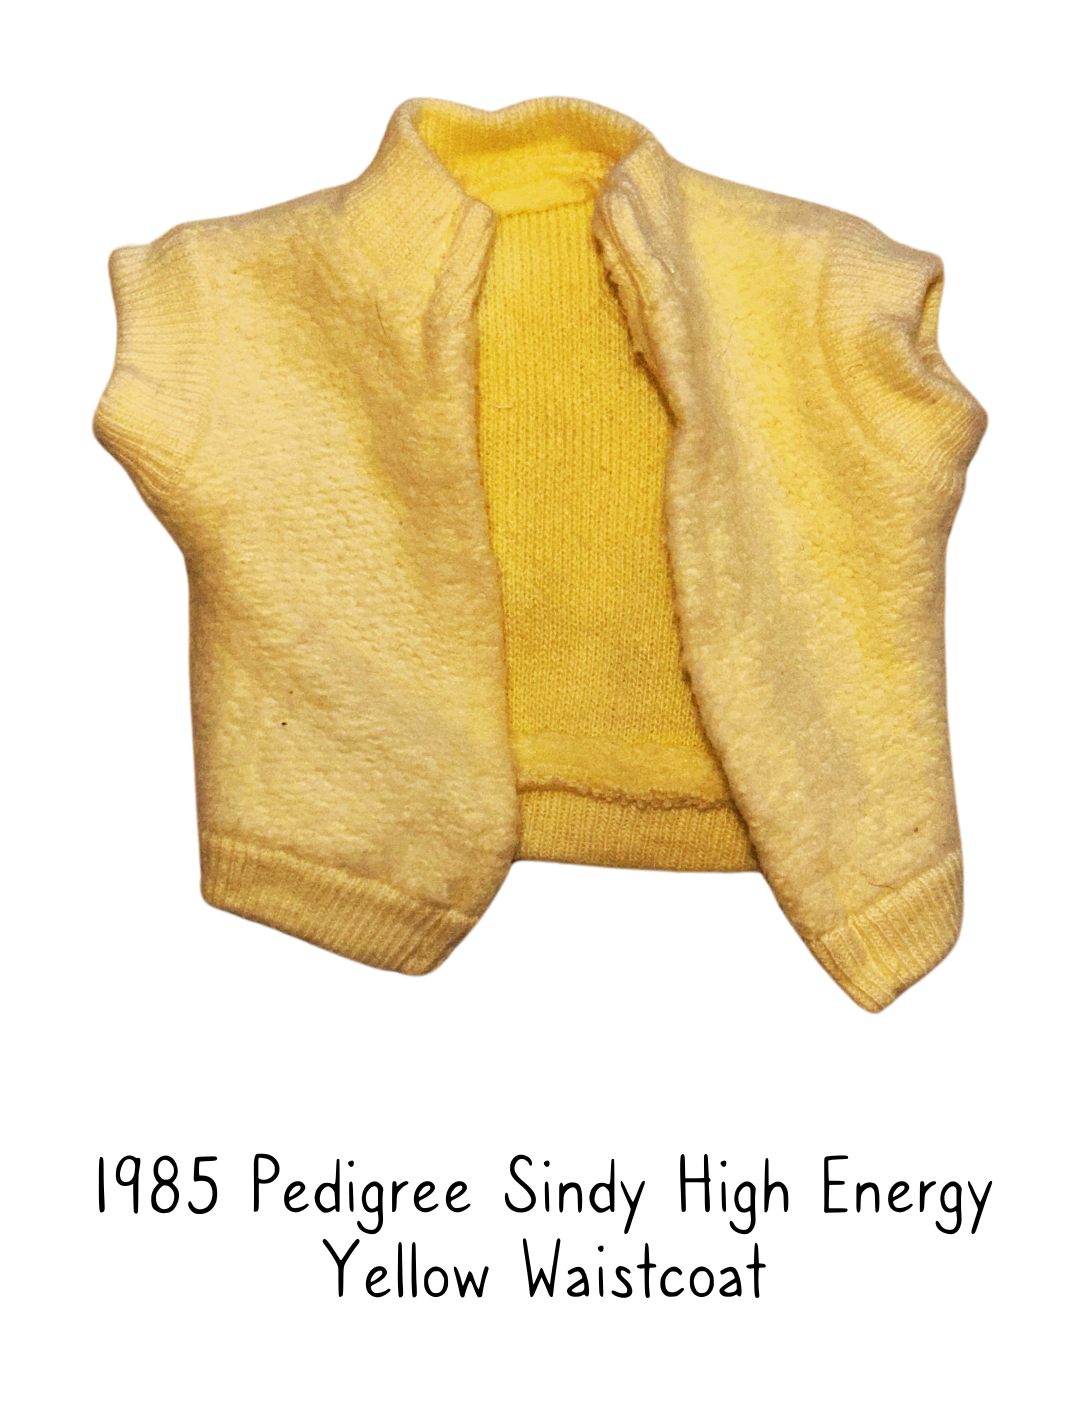 1985 Pedigree Sindy Fashion Doll High Energy Tracksuit Yellow Waistcoat